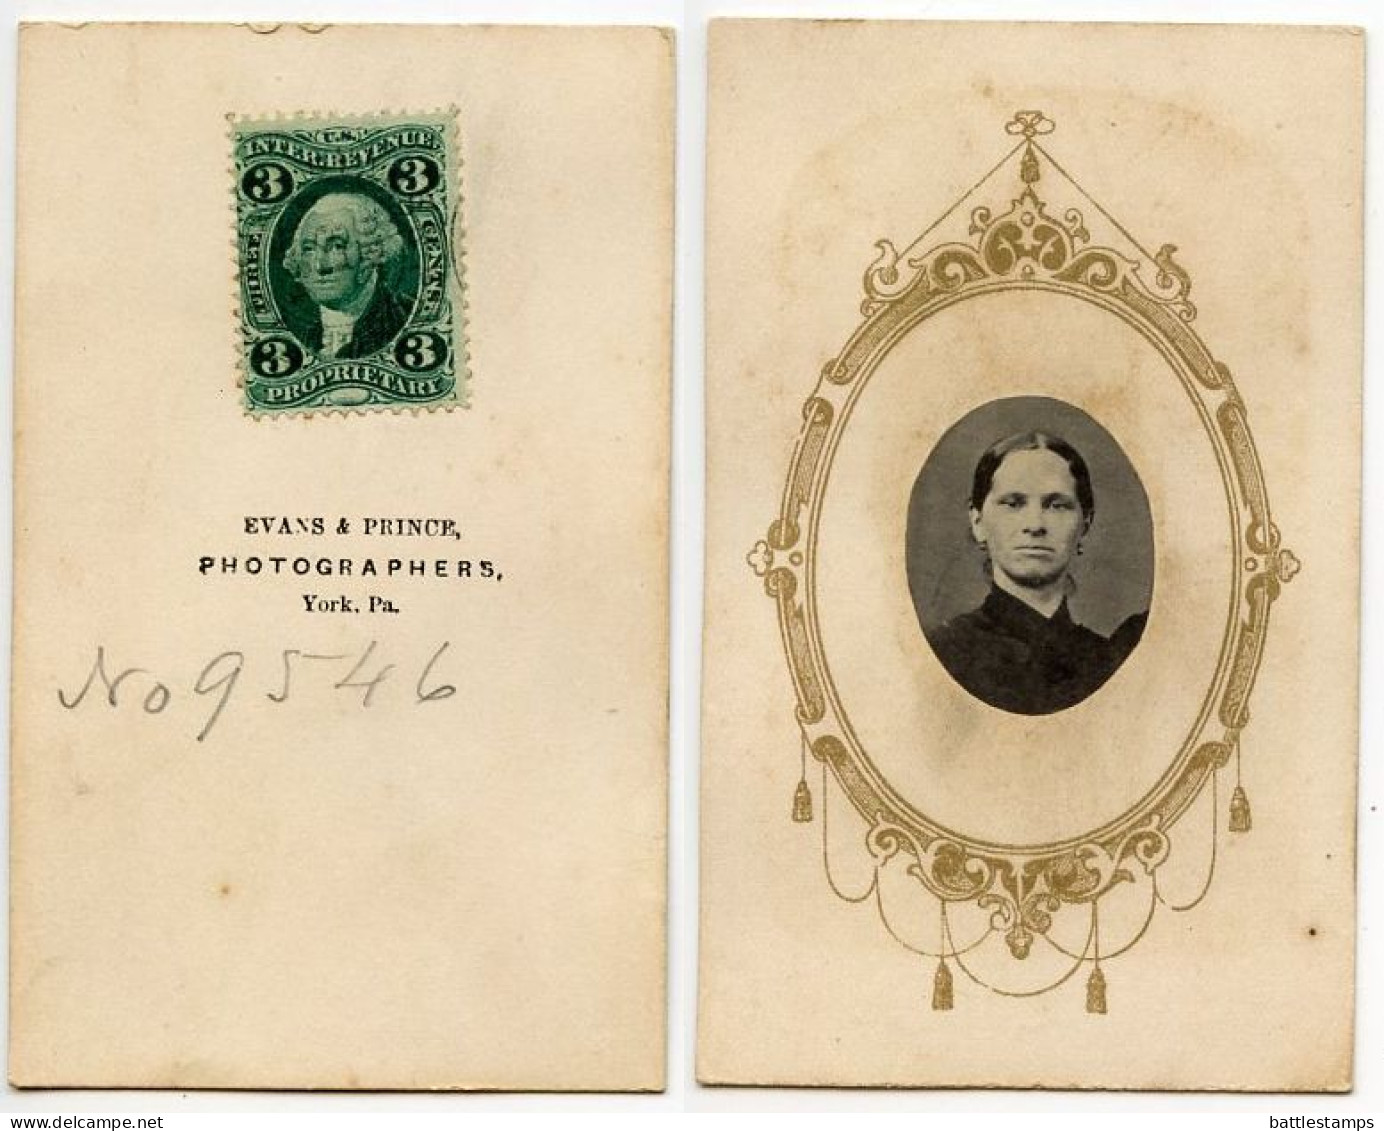 United States 1860‘s Photograph, Woman - Evans & Prince, York, Pennsylvania - Scott R18c Revenue Stamp - Revenues